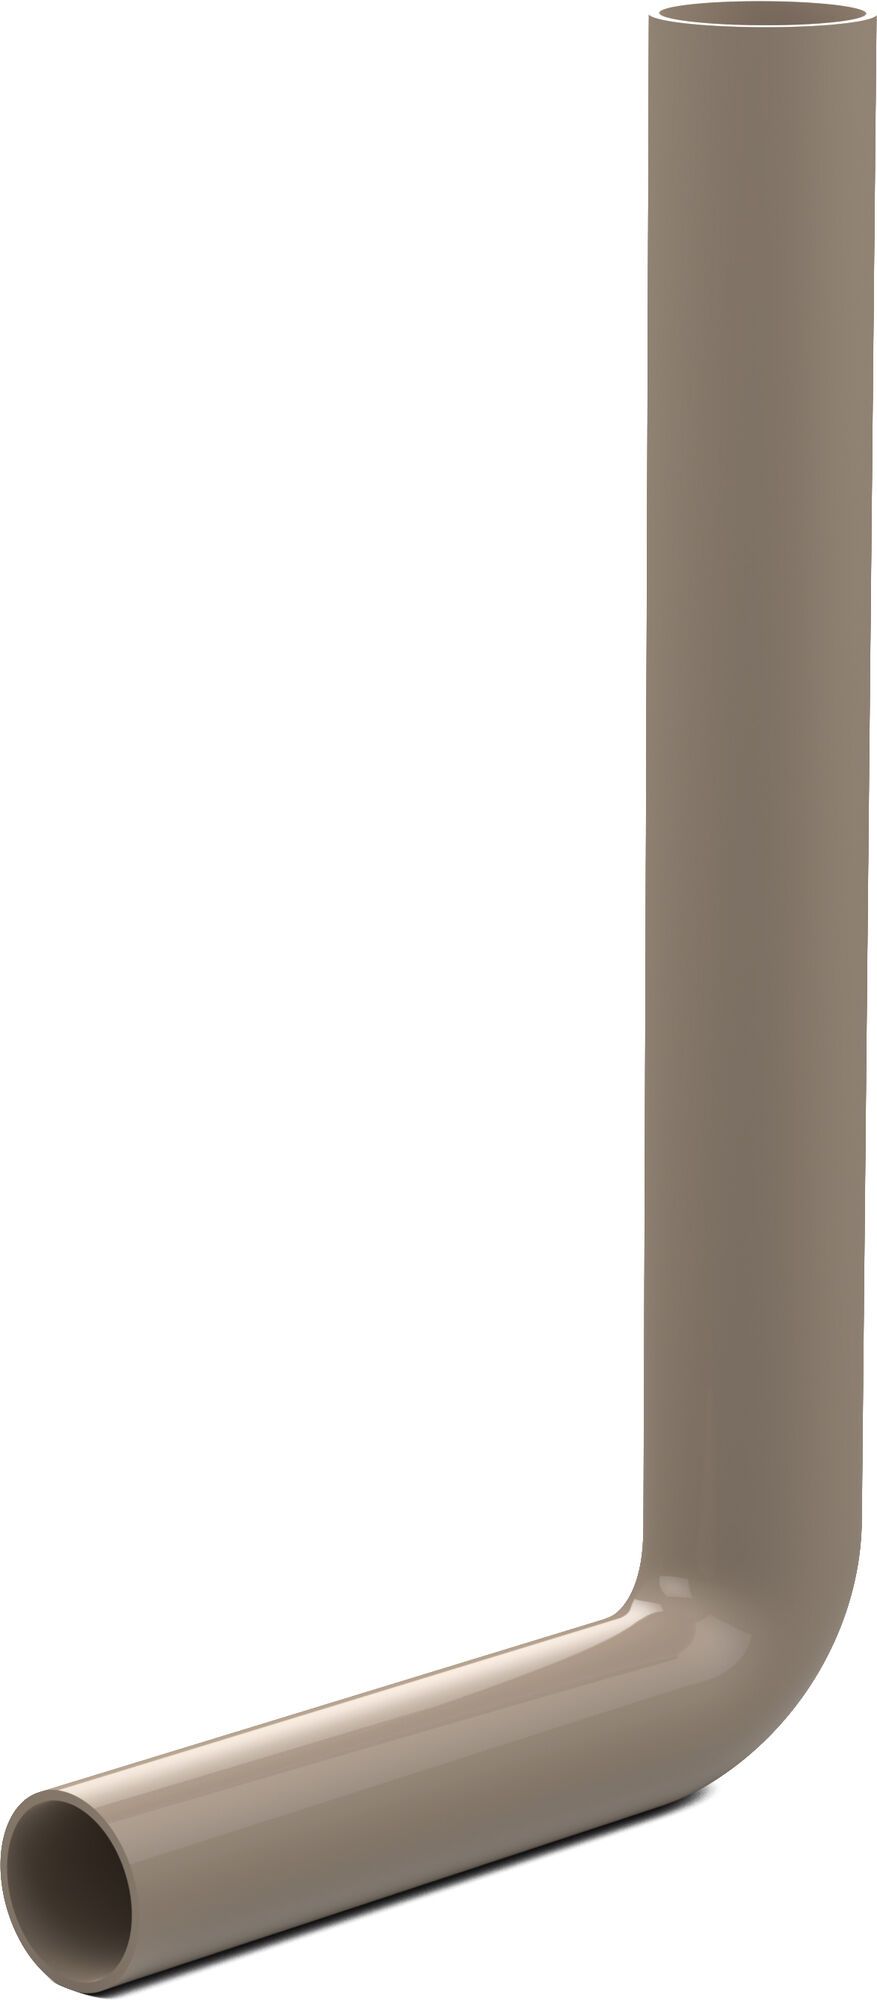 Flush pipe elbow 380 x 210 mm, beige